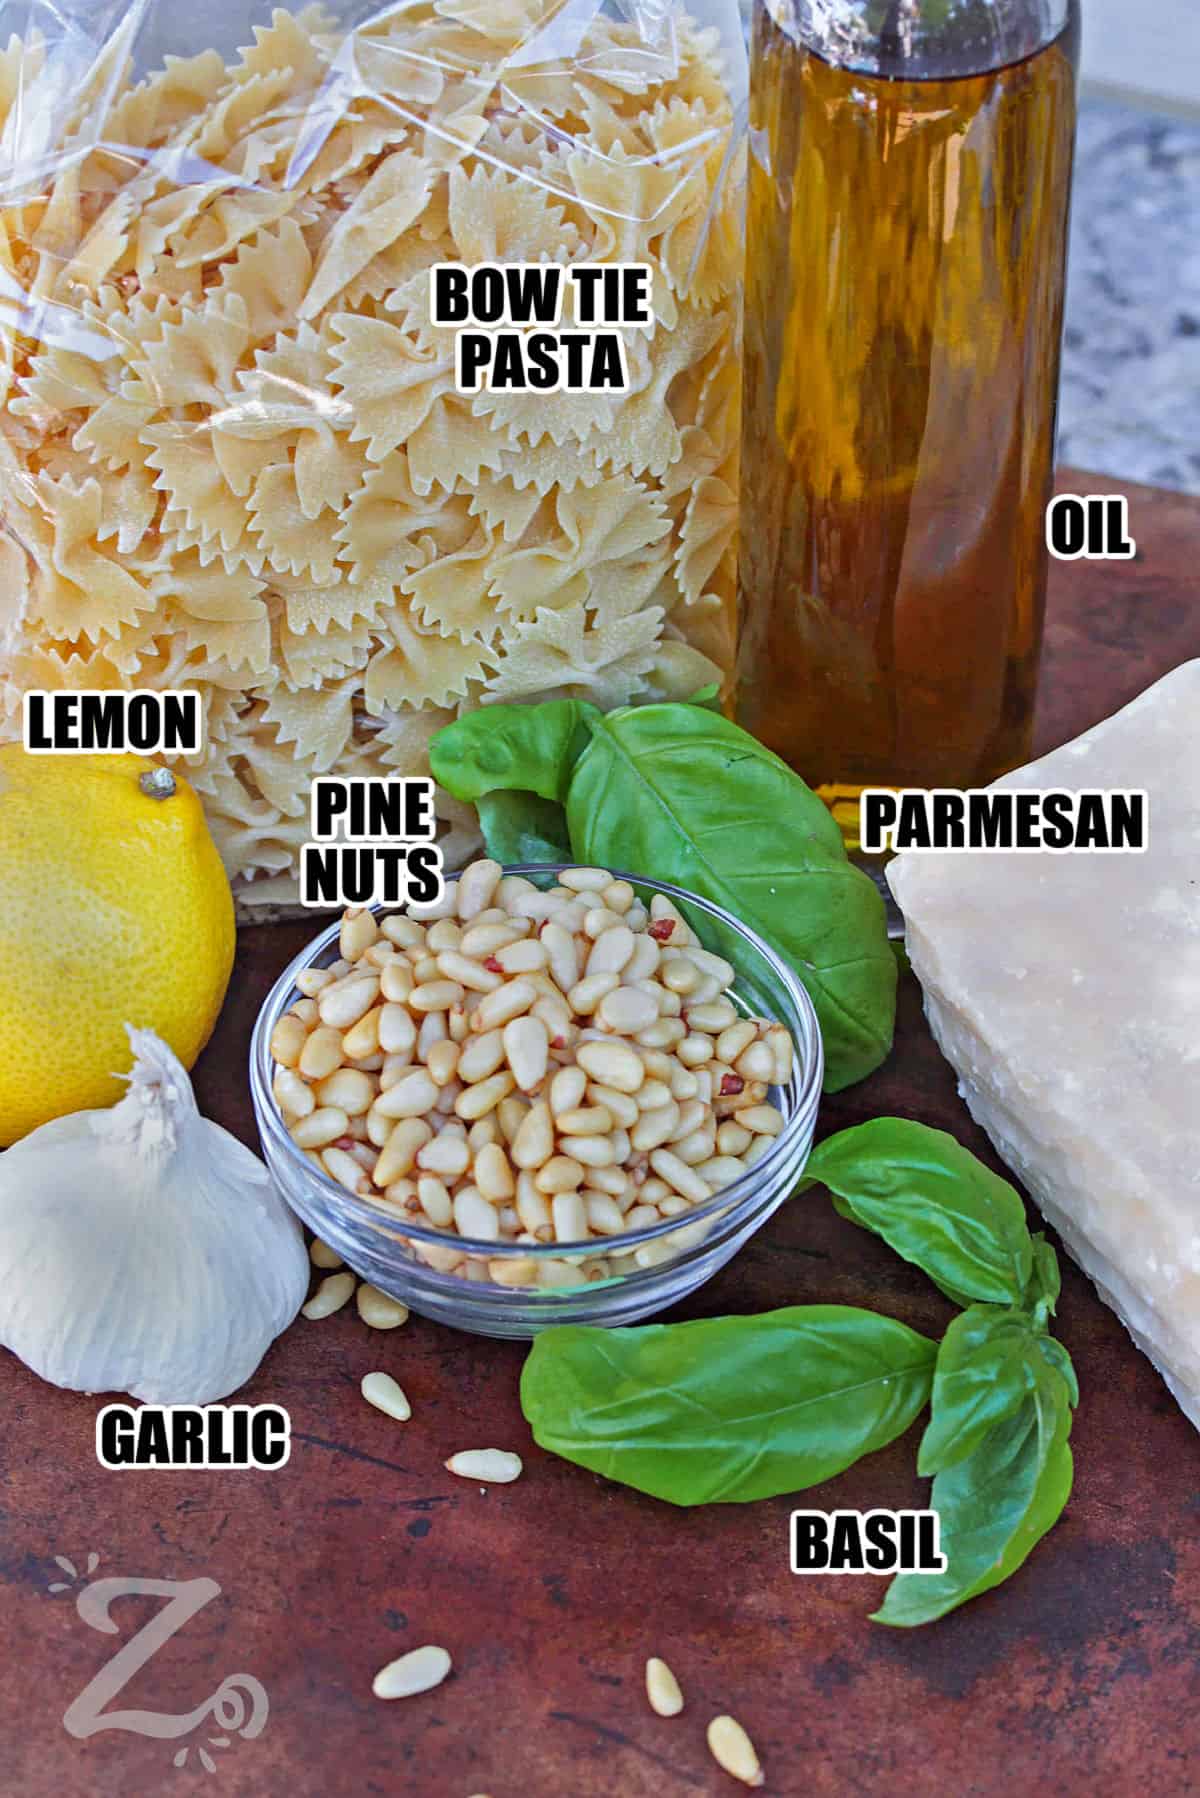 lemon , pine nuts , bow tie pasta , oil , parmesan, garlic and basil with labels to make Bowtie Pesto Pasta Salad